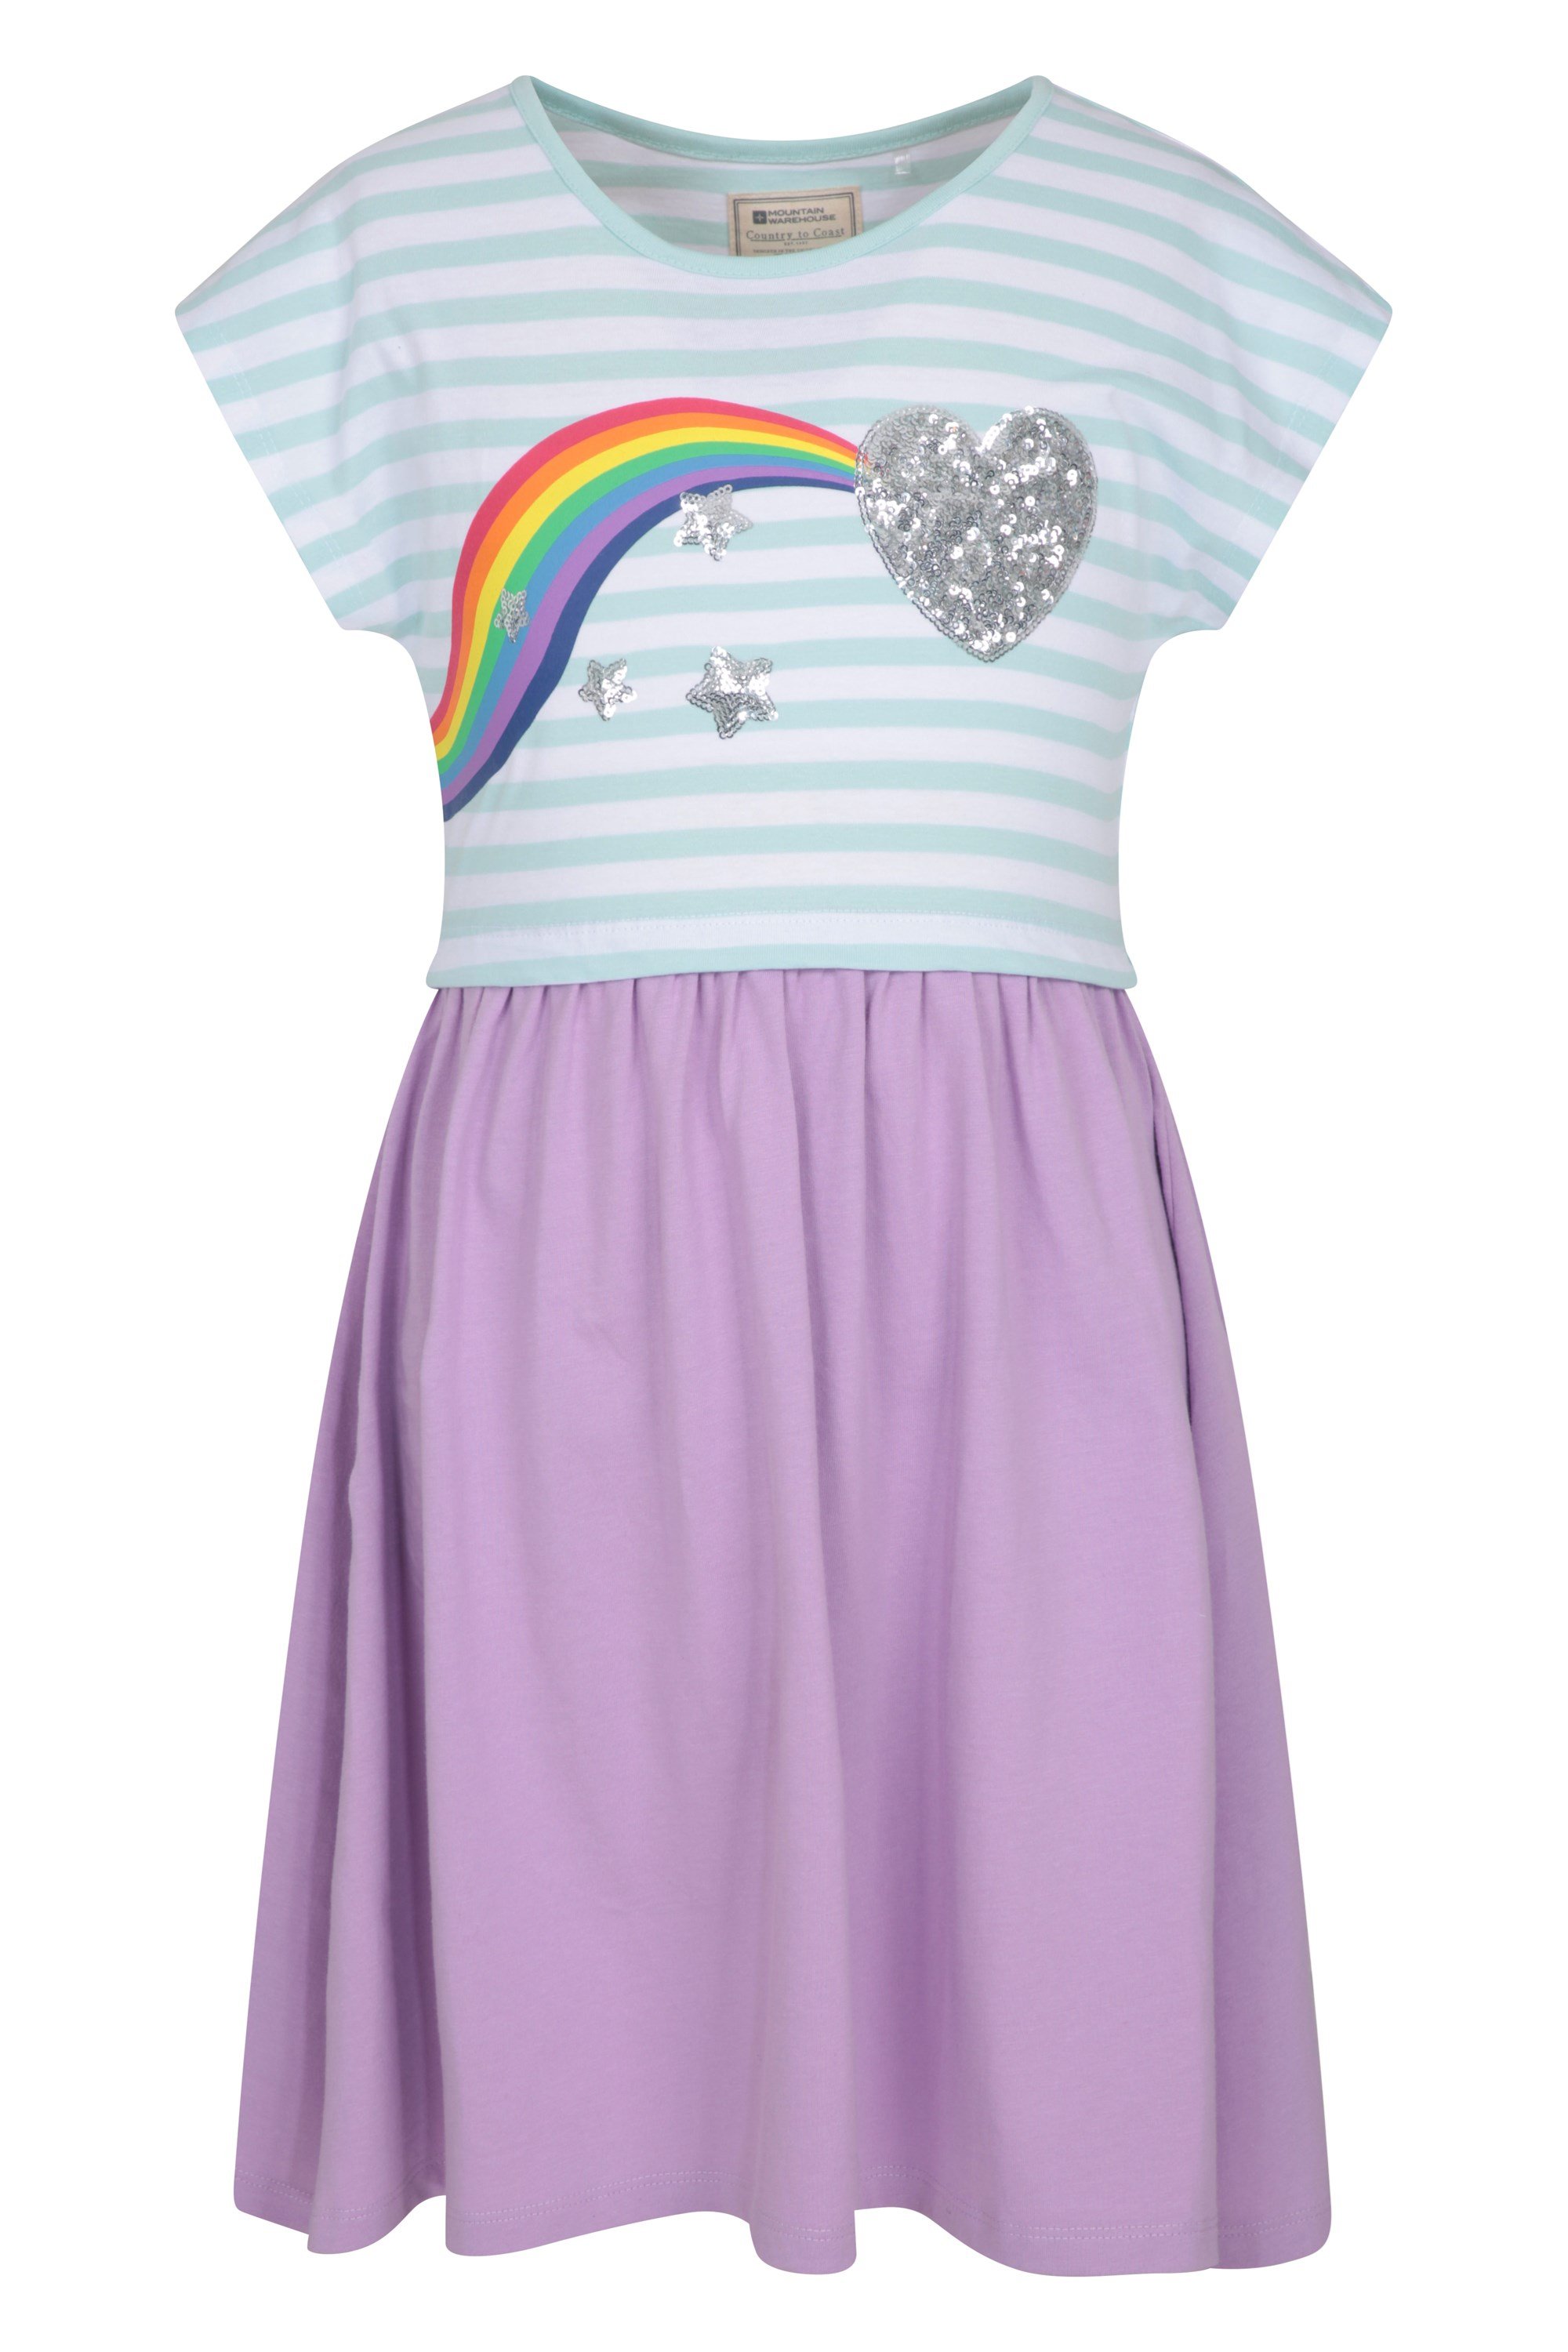 Mountain Warehouse Pippy Girls Dress 100% Cotton Kids Dress